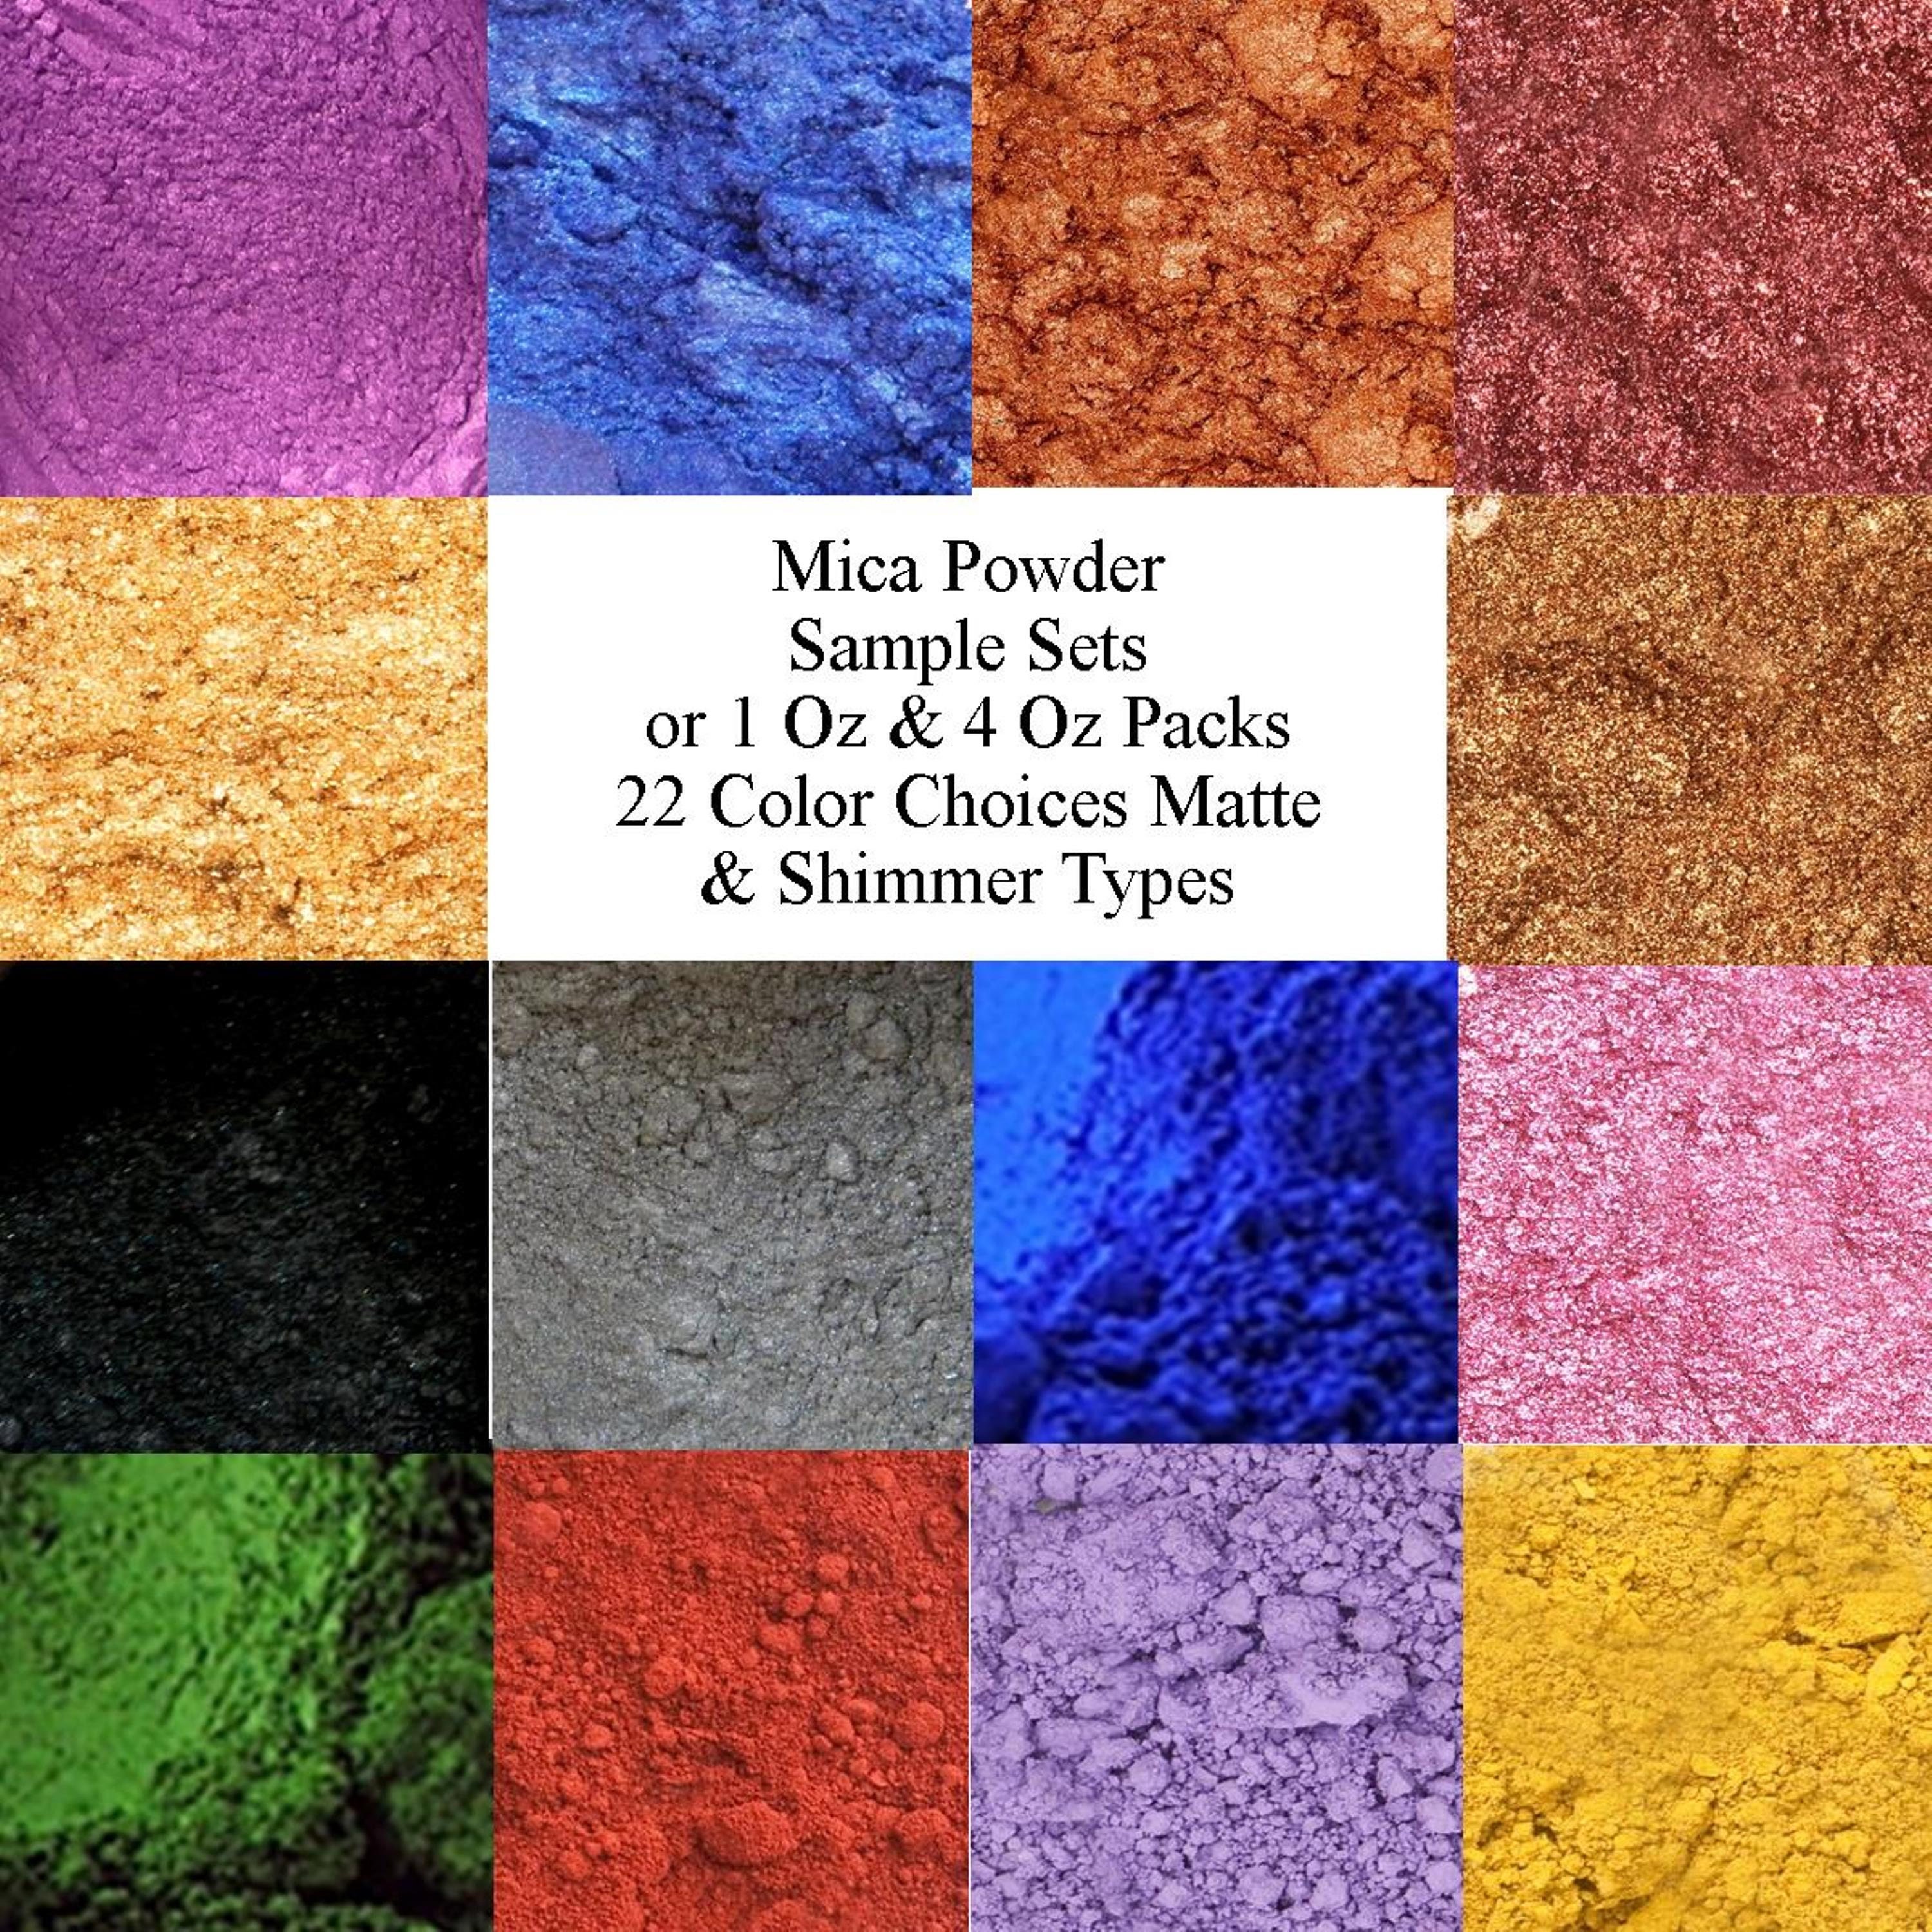 Eye Candy Mica Powder Pigment Baku Red (25g) Multipurpose DIY Arts and Crafts Additive | Natural Bath Bombs, Resin, Paint, Epoxy, Soap, Nail Polish, L